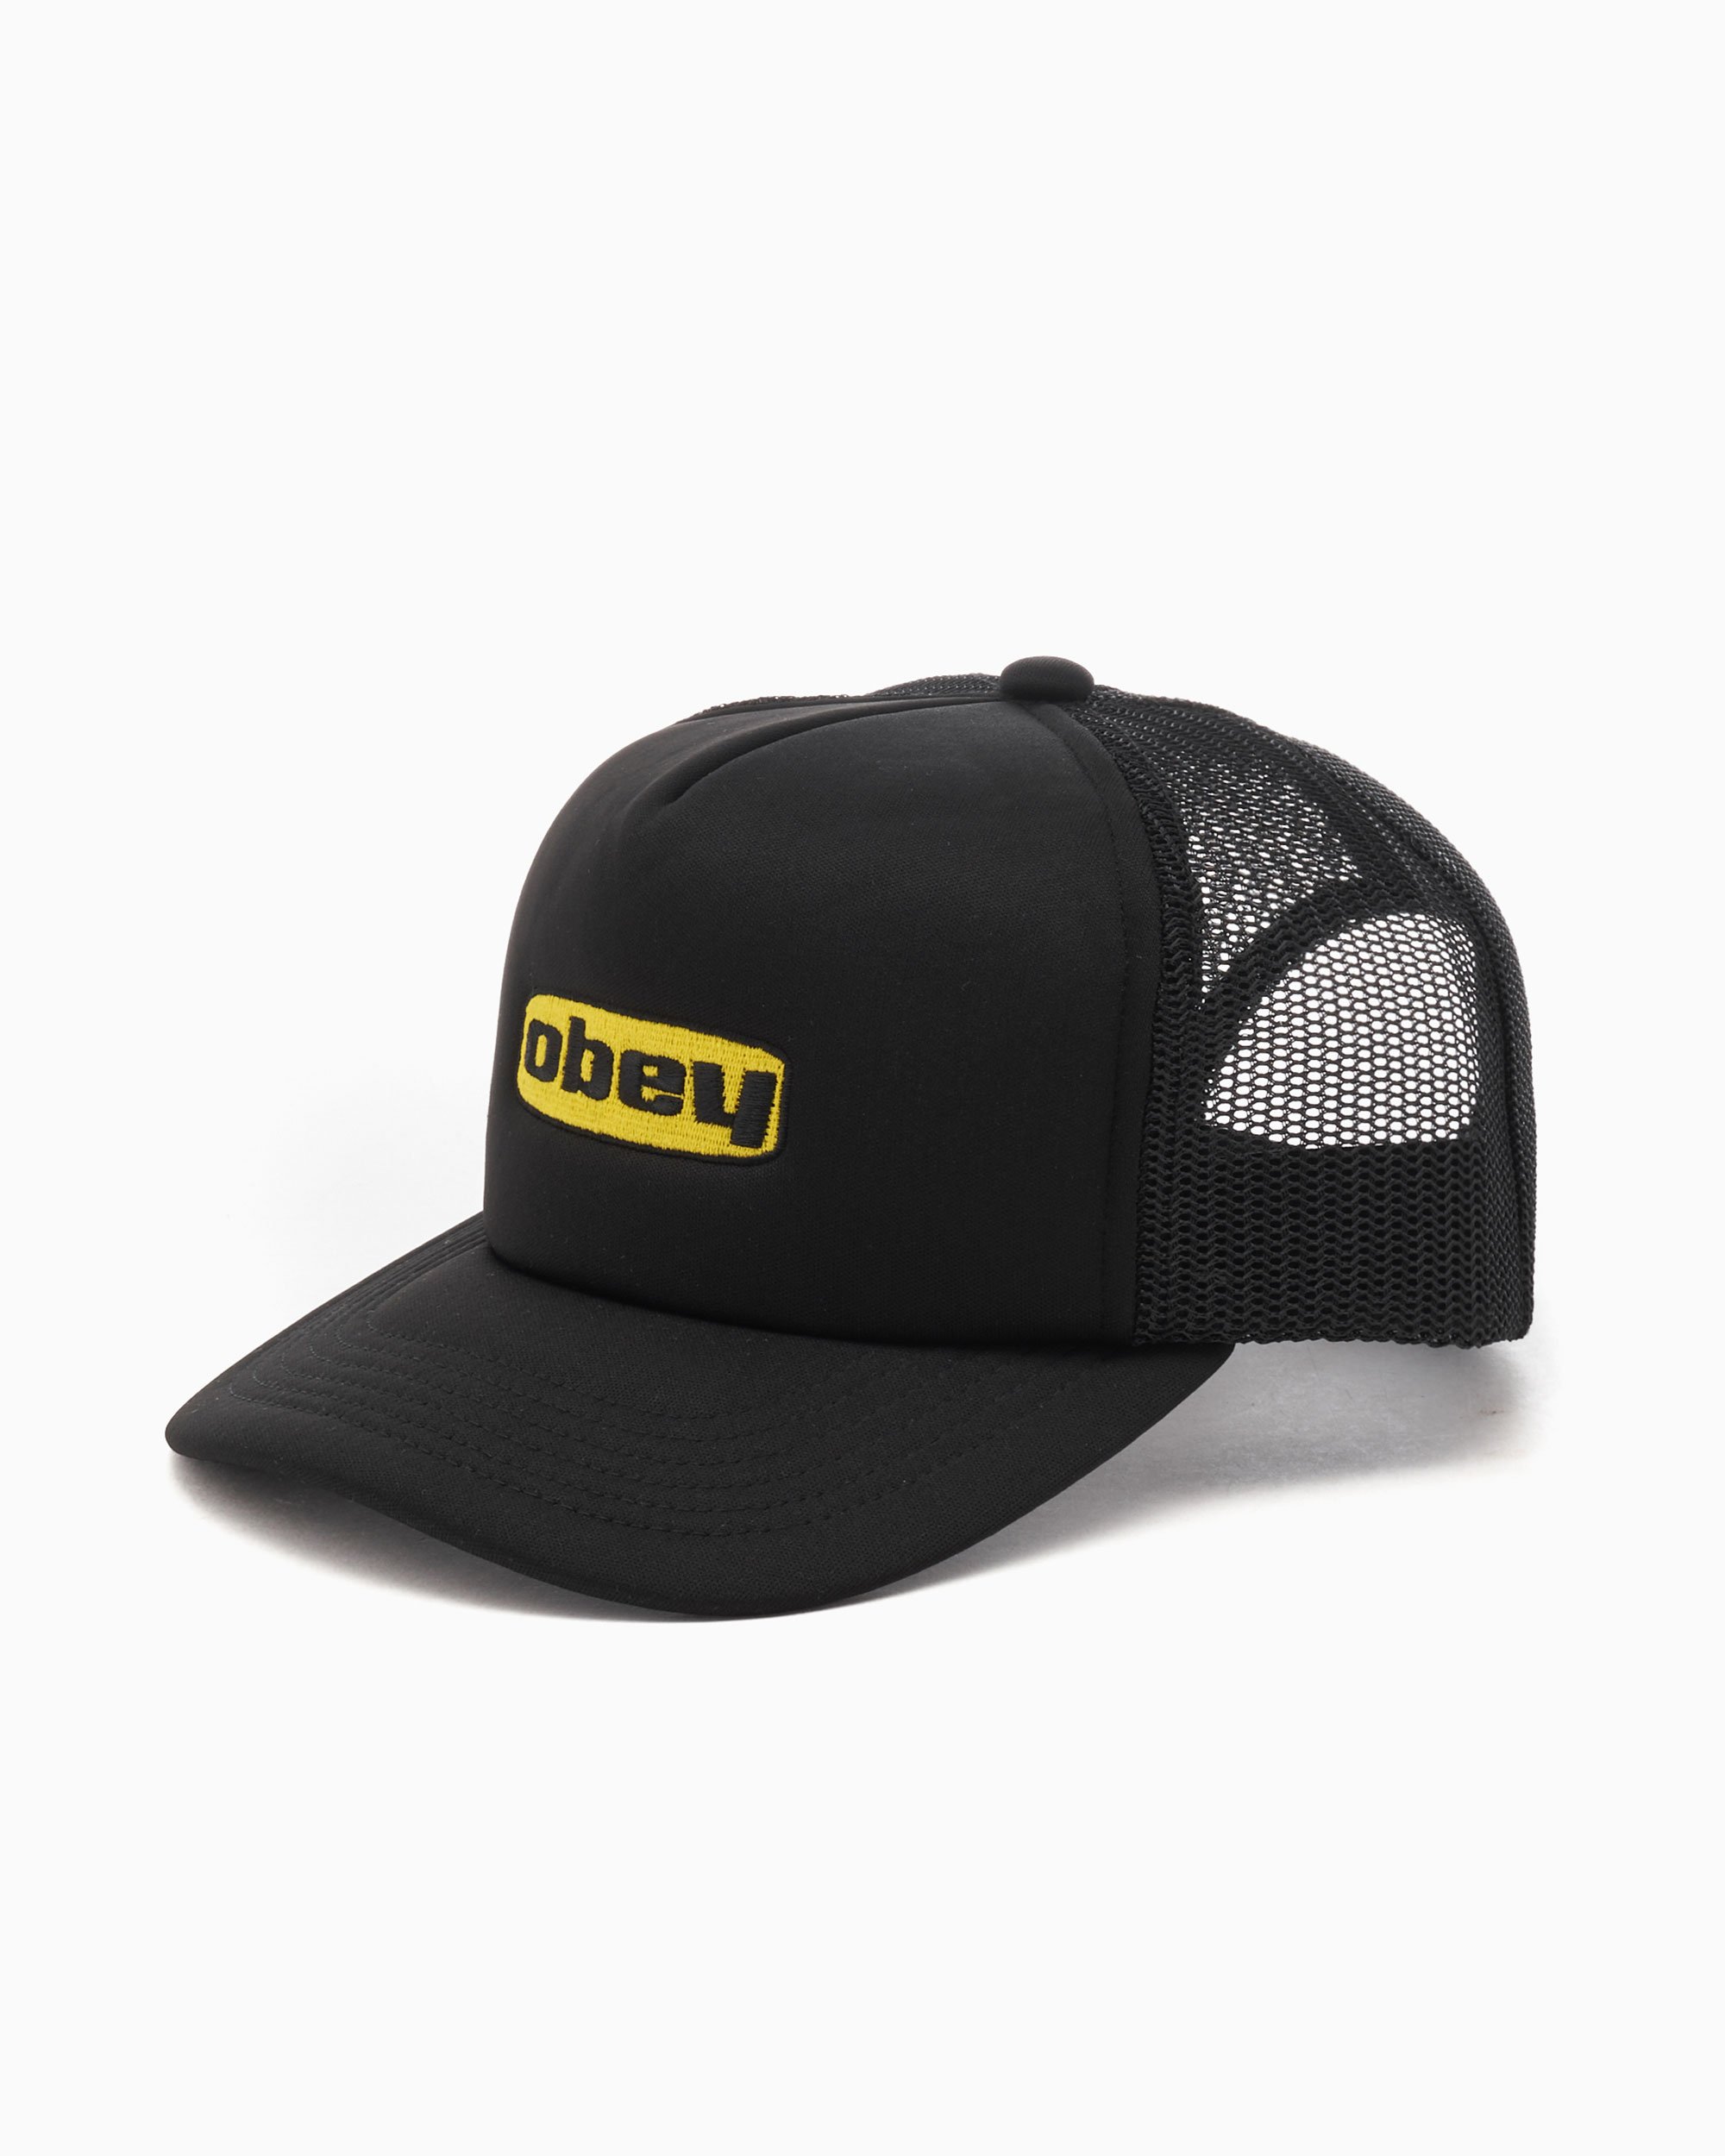 OBEY Clothing Direct Unisex Trucker Cap Black 100500045-BLK